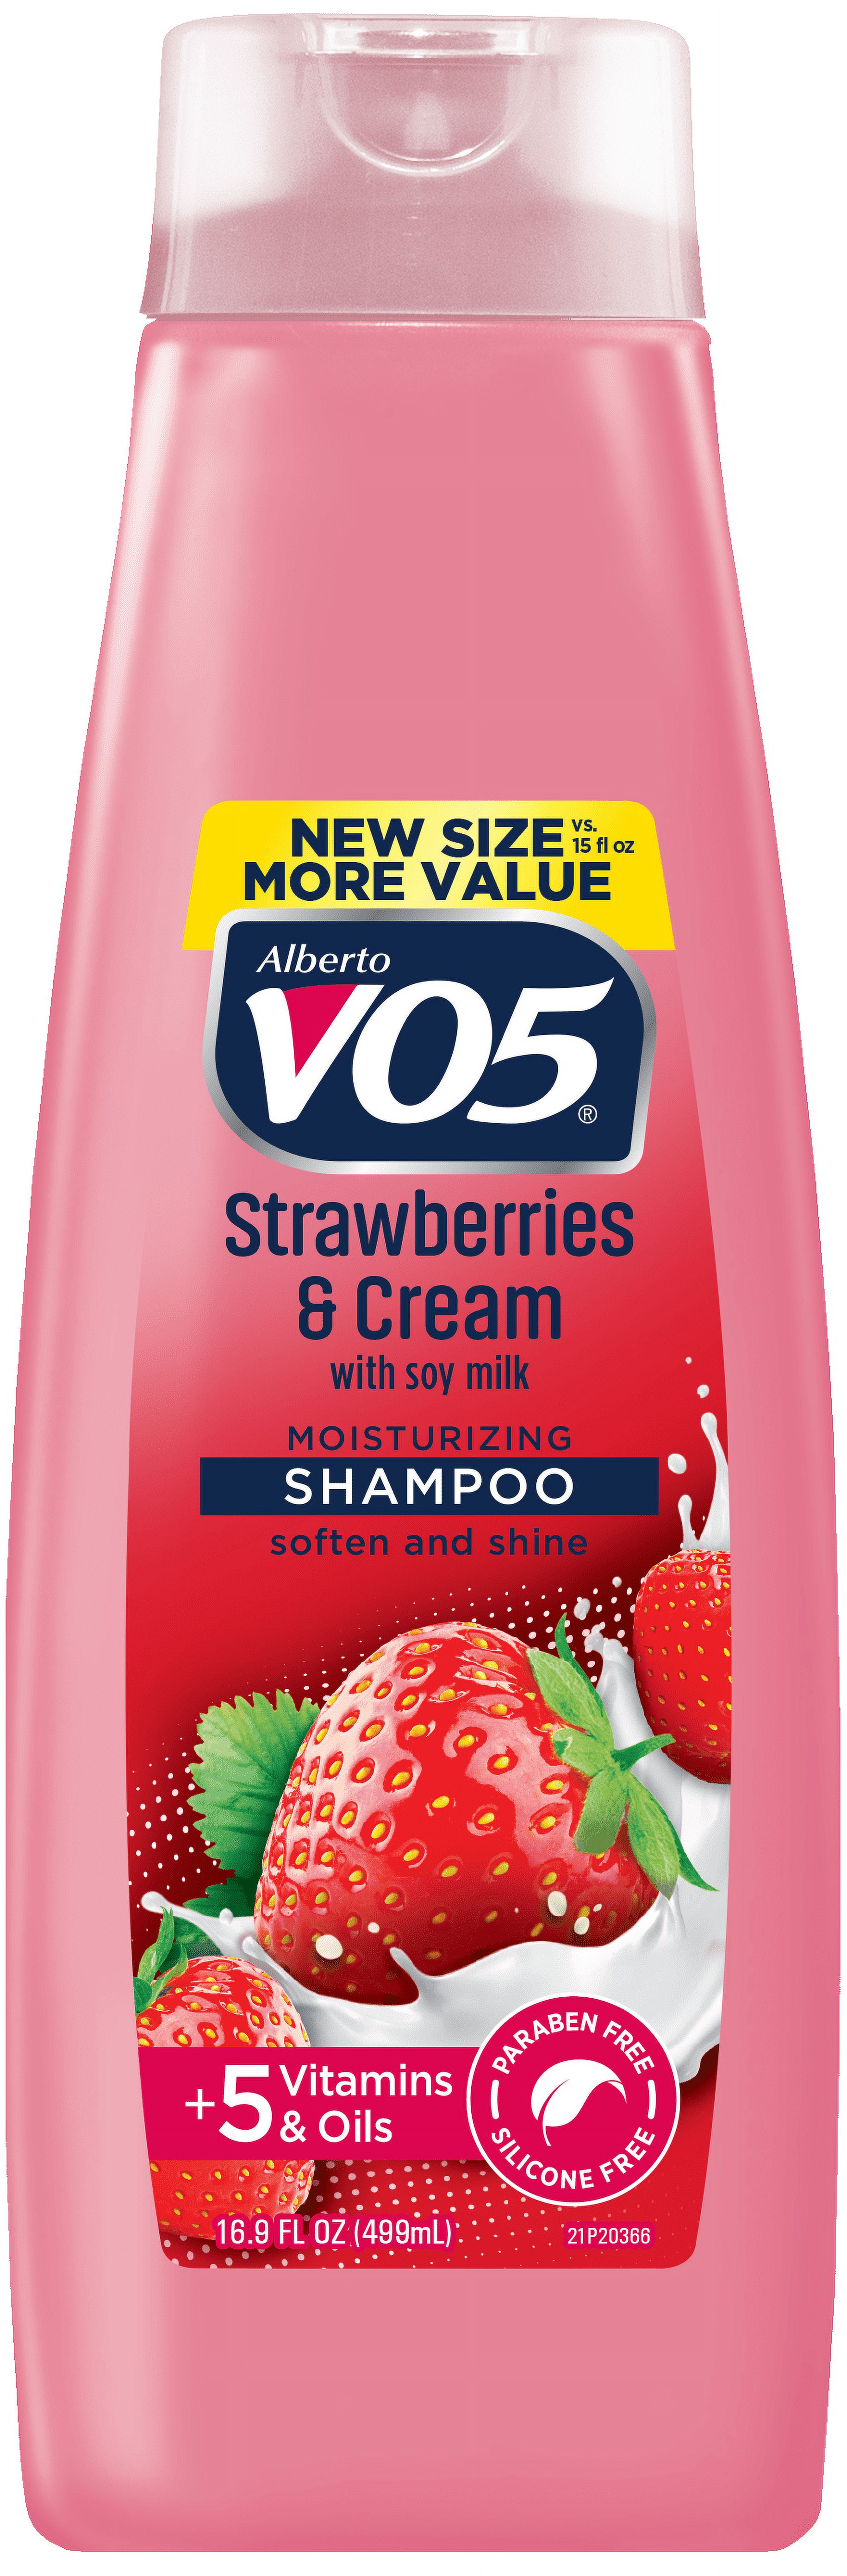 Alberto VO5 Strawberries & Cream Moisturizing Shampoo with Soy Milk, for All Hair Types, 16.9 fl oz - image 1 of 6